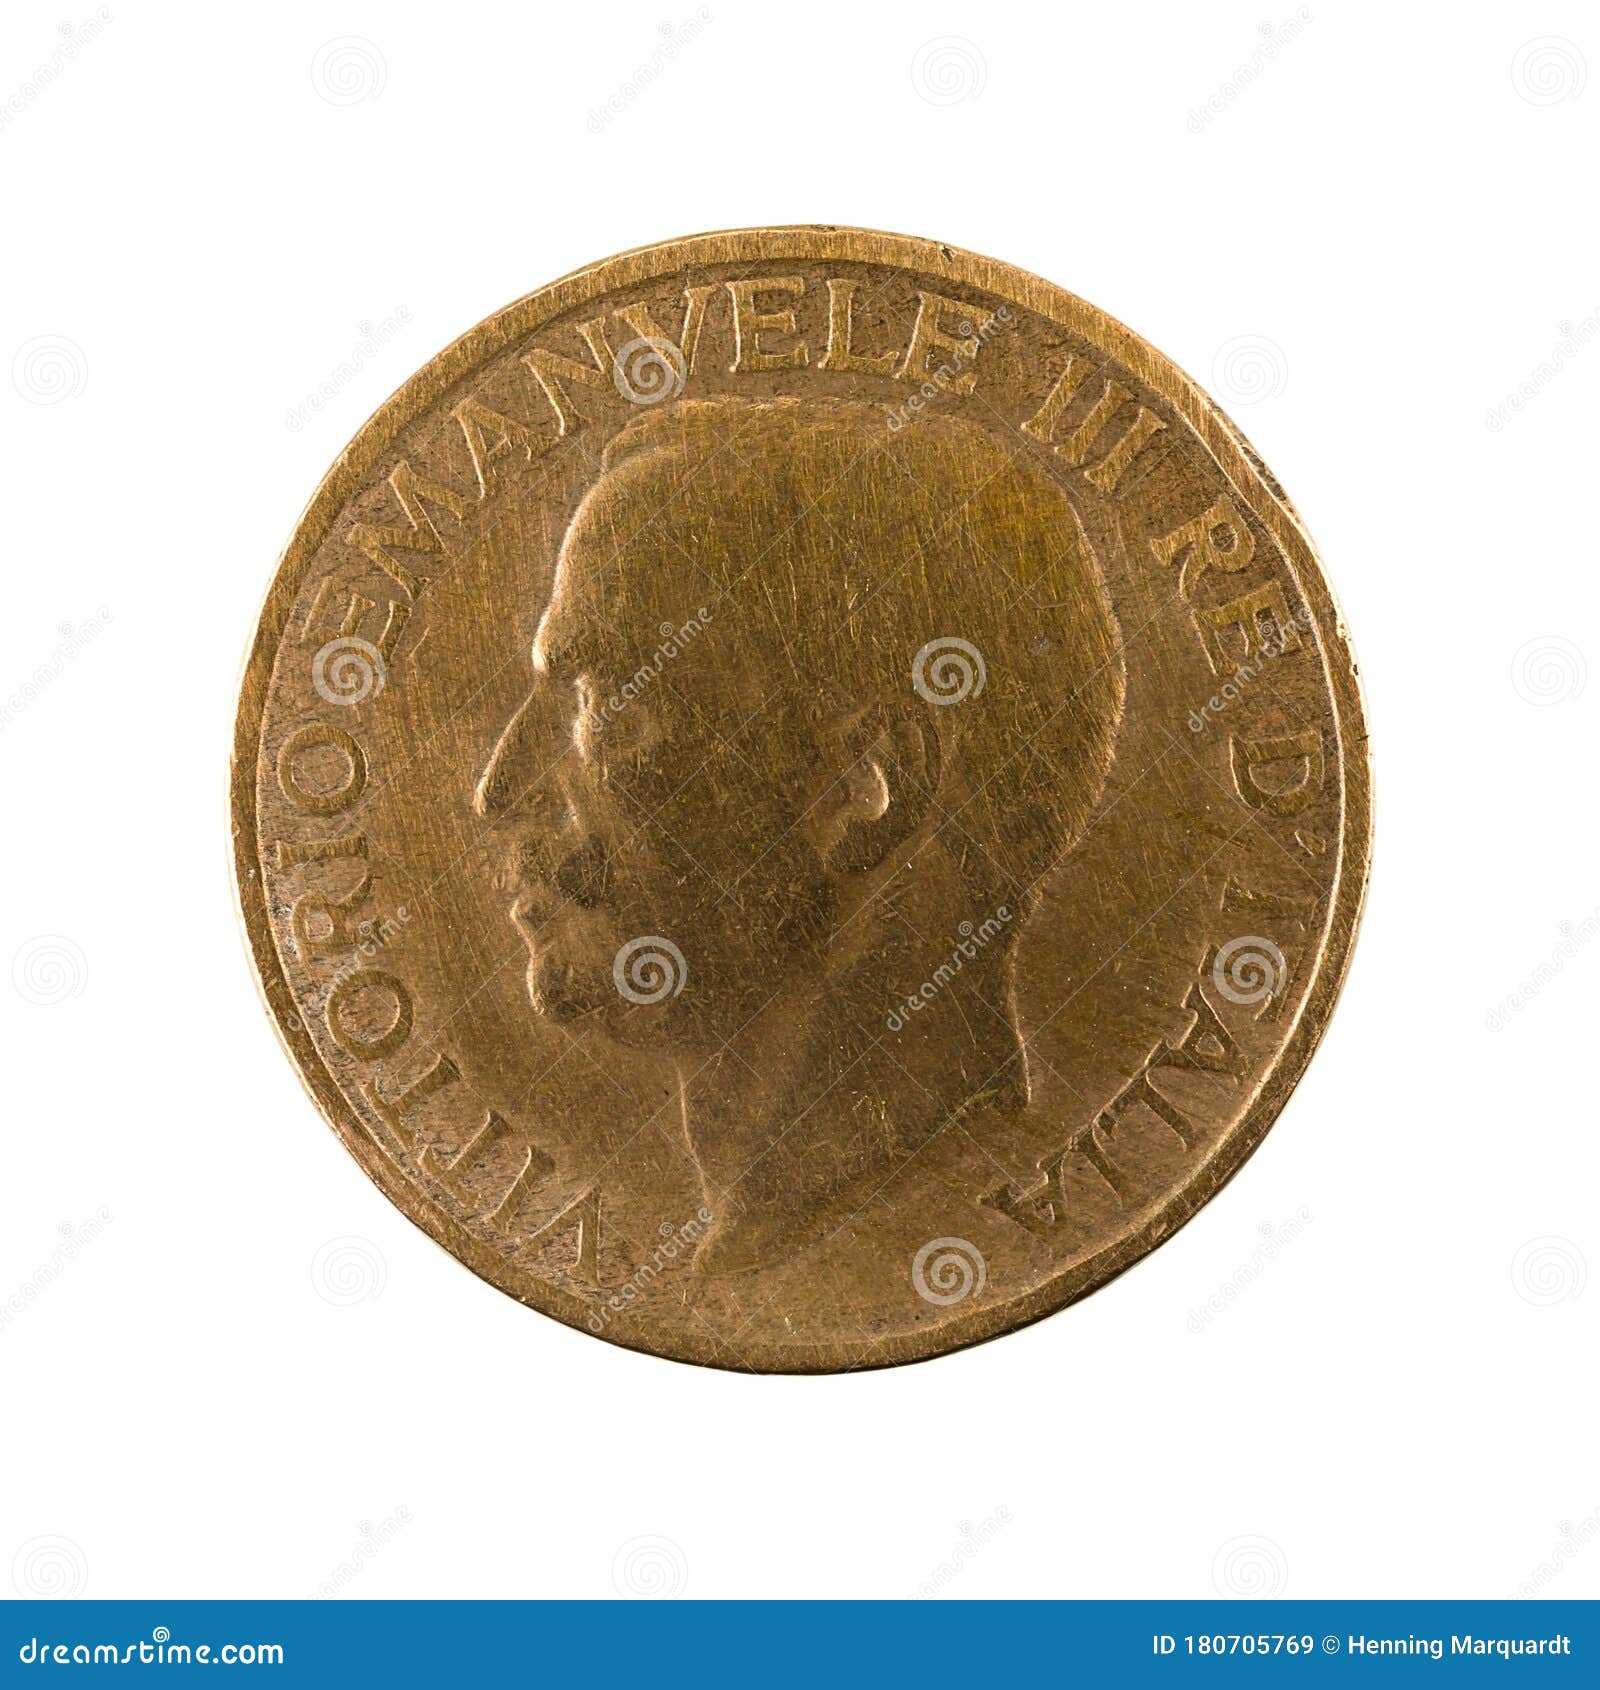 10 italian centesimi coin 1931 reverse  on white background